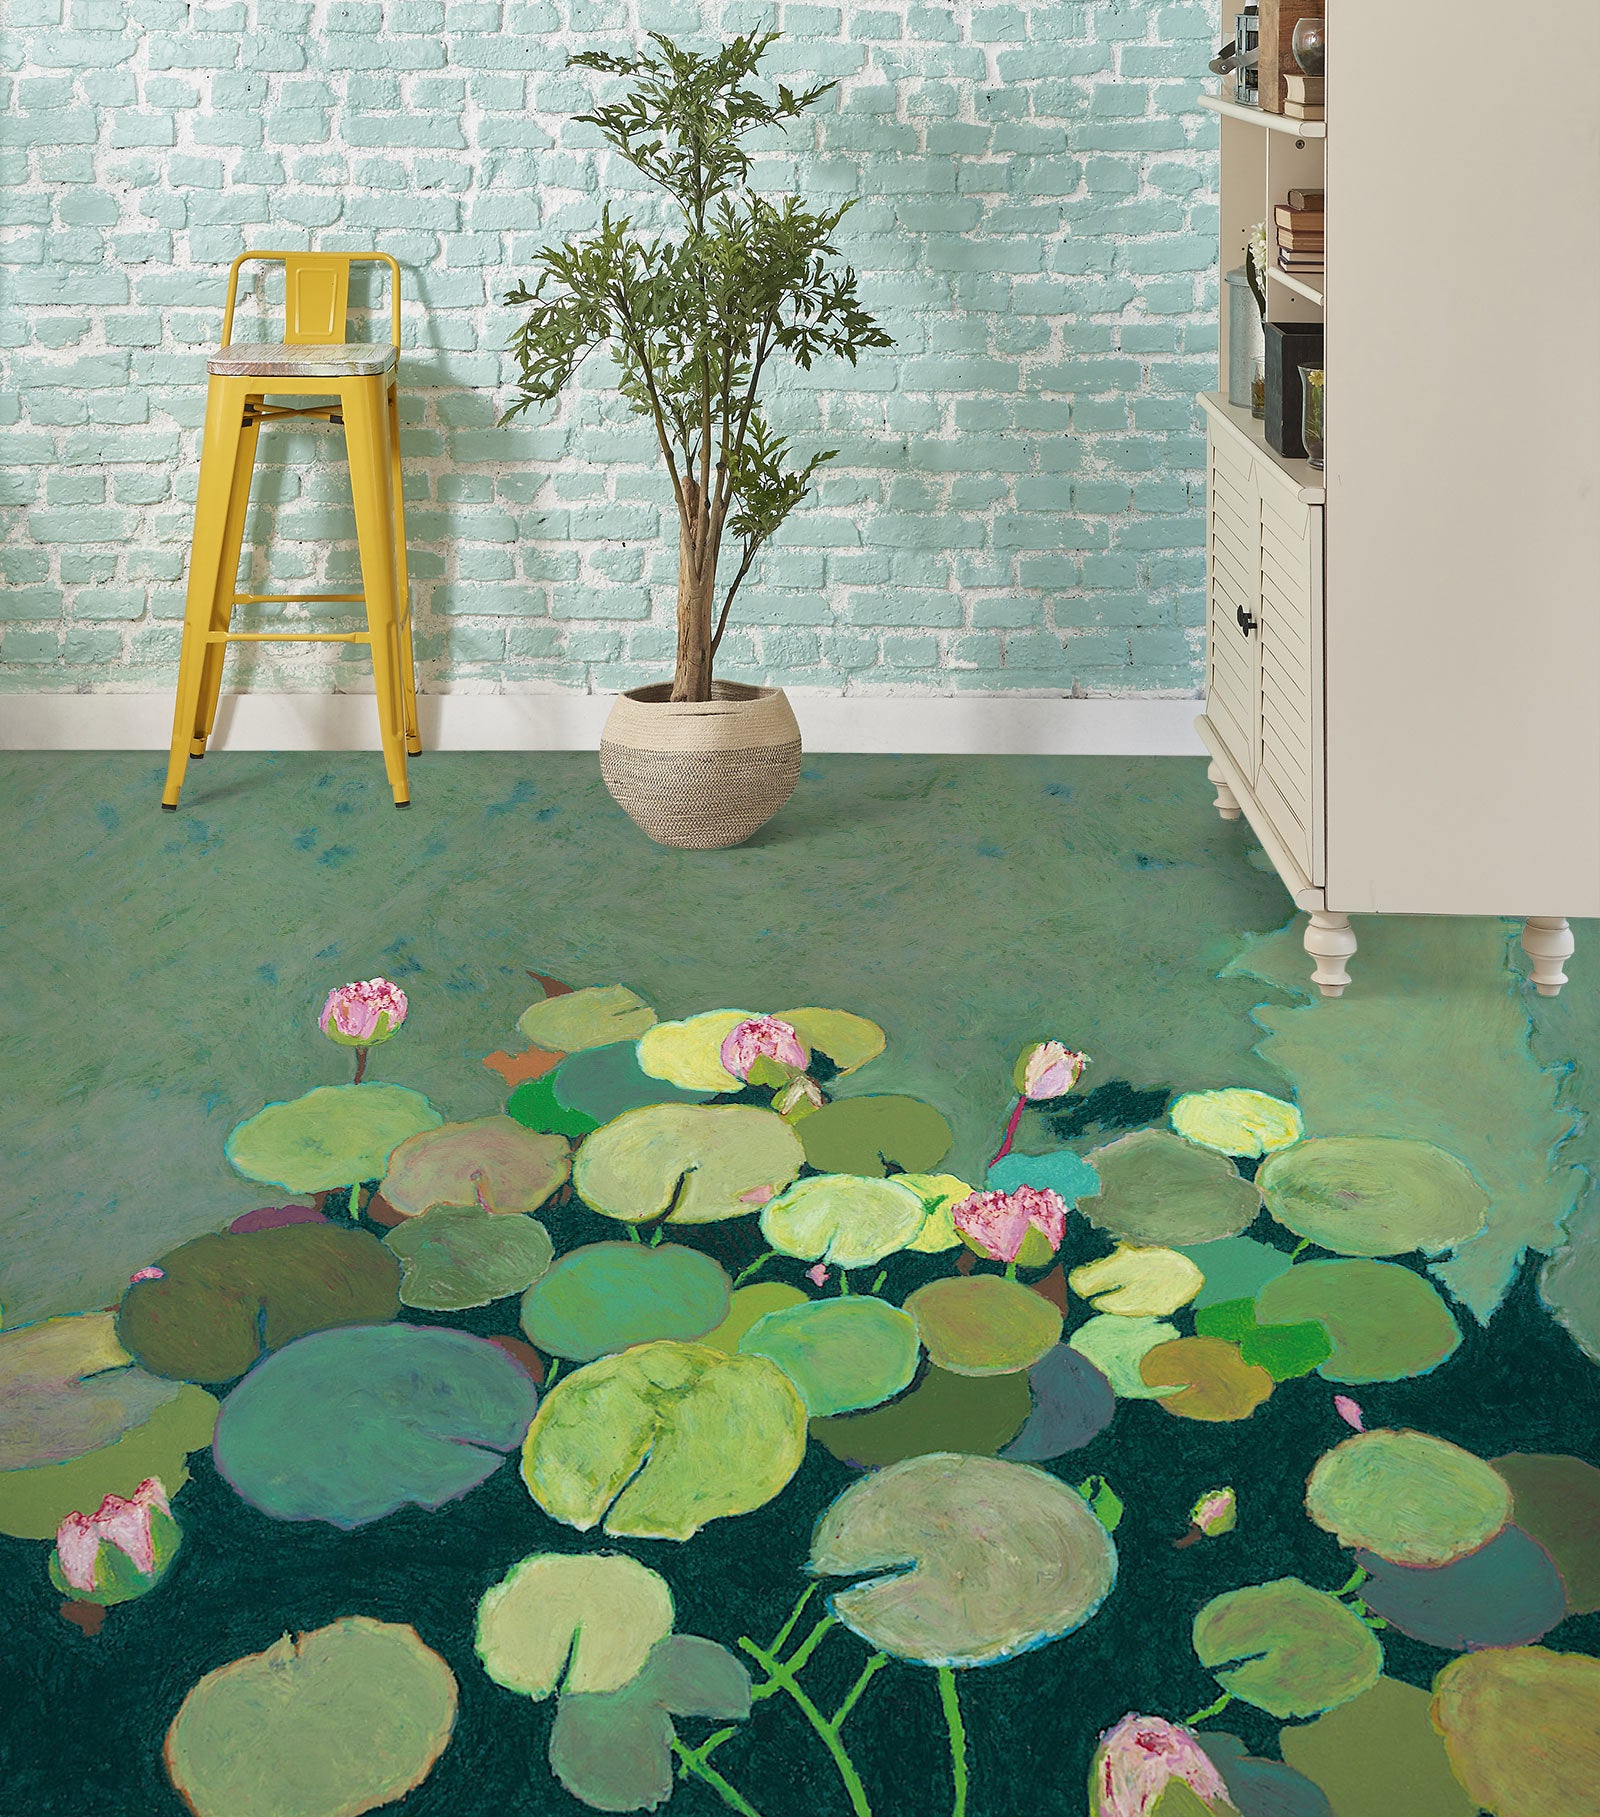 3D Lotus Pond 9686 Allan P. Friedlander Floor Mural  Wallpaper Murals Self-Adhesive Removable Print Epoxy